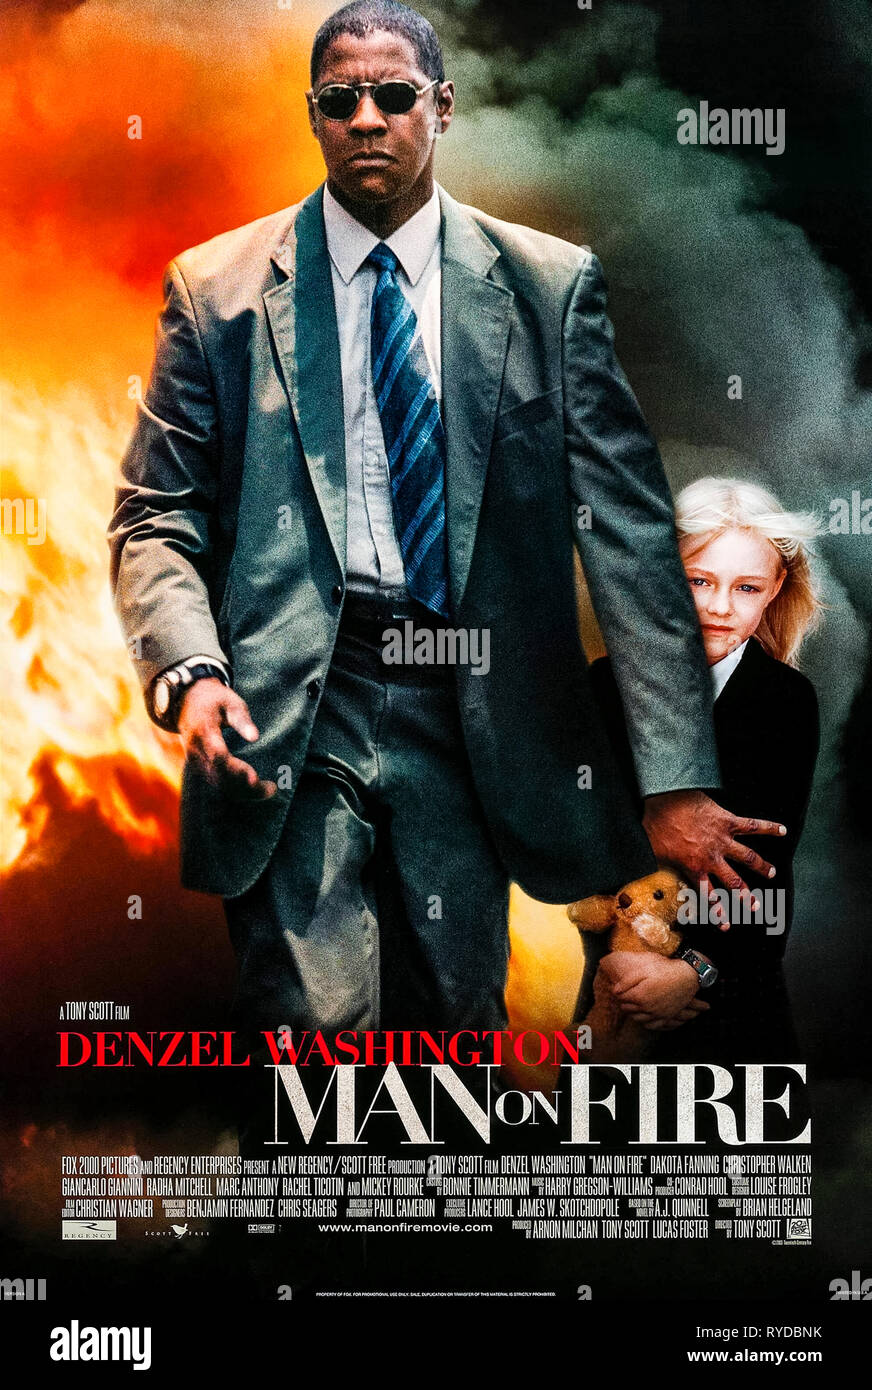 Man on Fire (2004) directed by Tony Scott and starring Denzel Washington, Christopher Walken and Dakota Fanning. Stock Photo